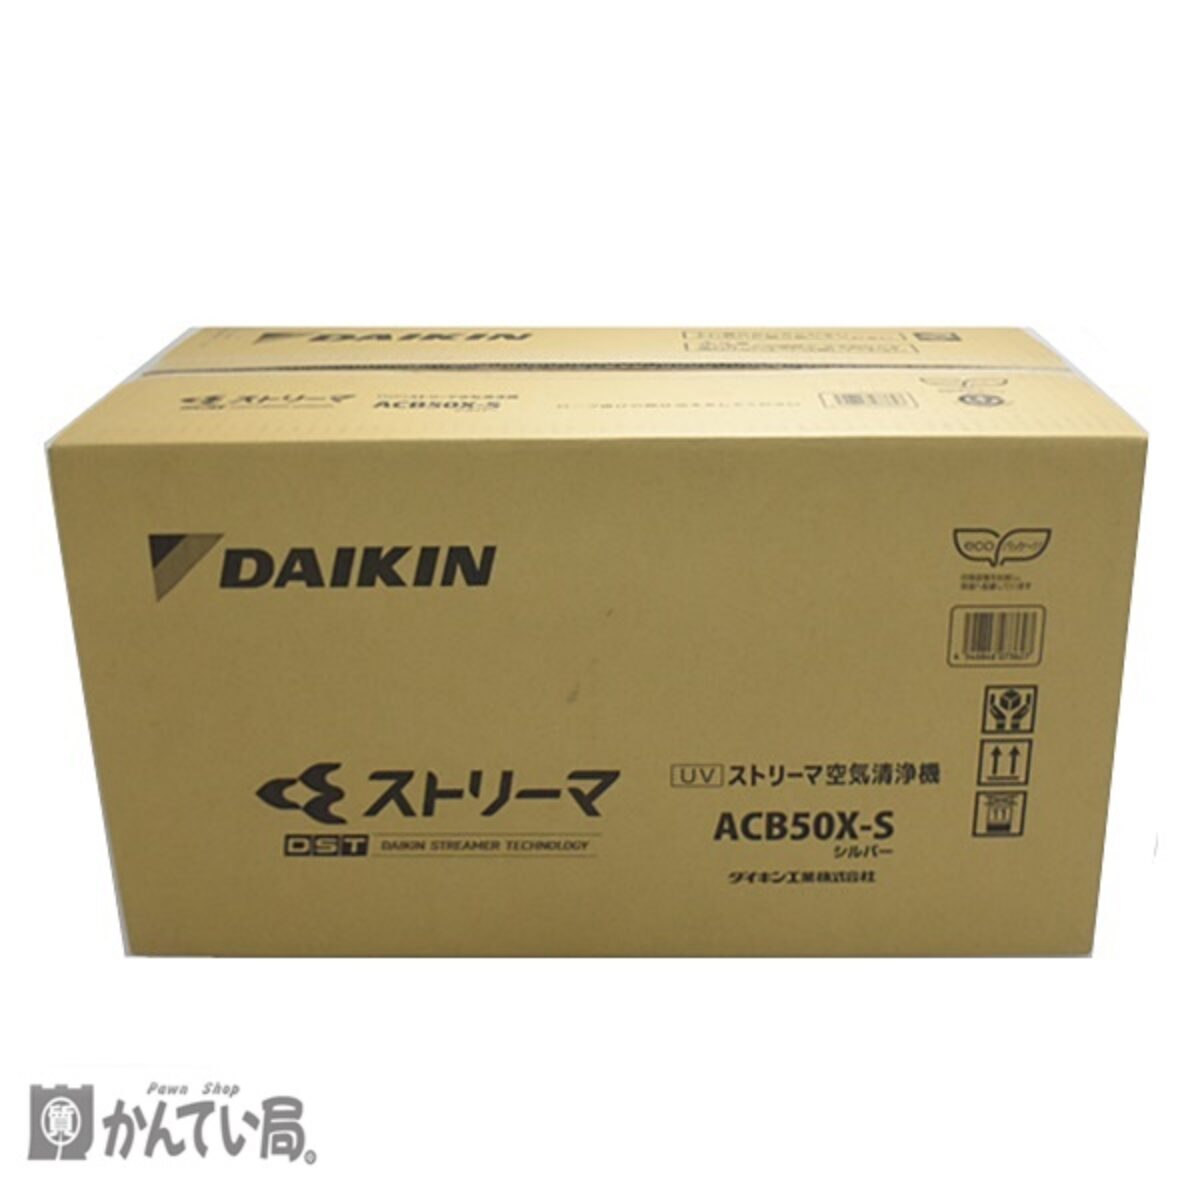 DAIKIN ACB50X-S ダイキン 空気清浄機 新品未使用未開封-silversky ...